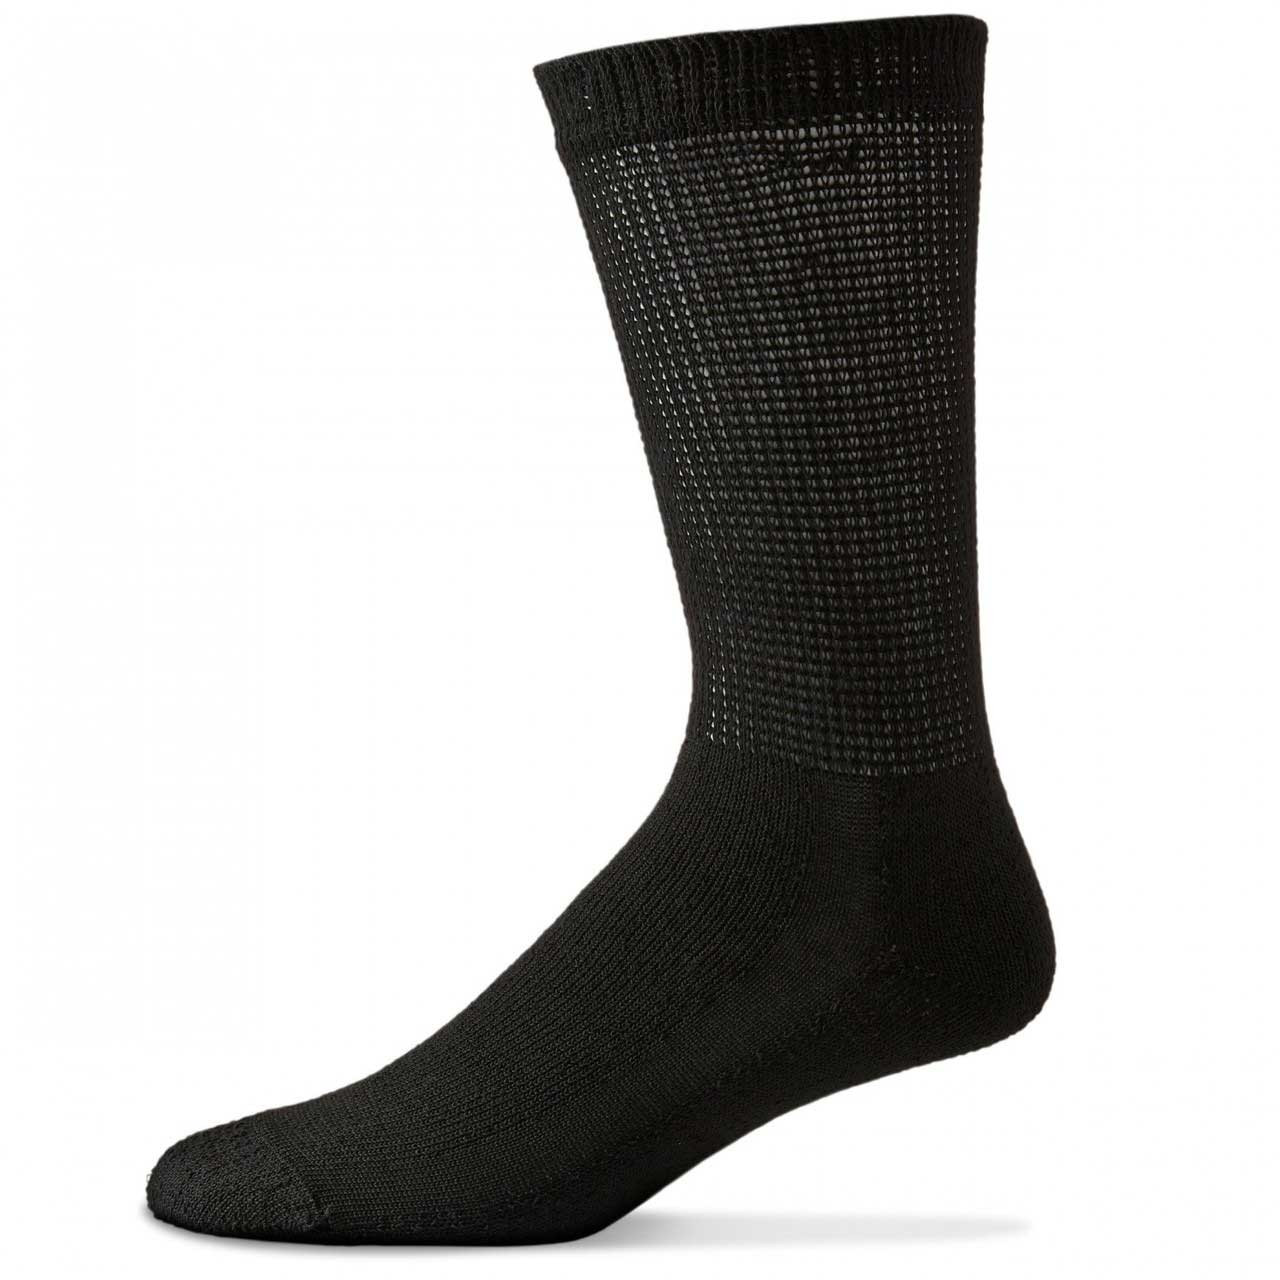 Physician's Choice Diabetic Calf Length Comfy Socks - 12 Pair Bulk Pack ...